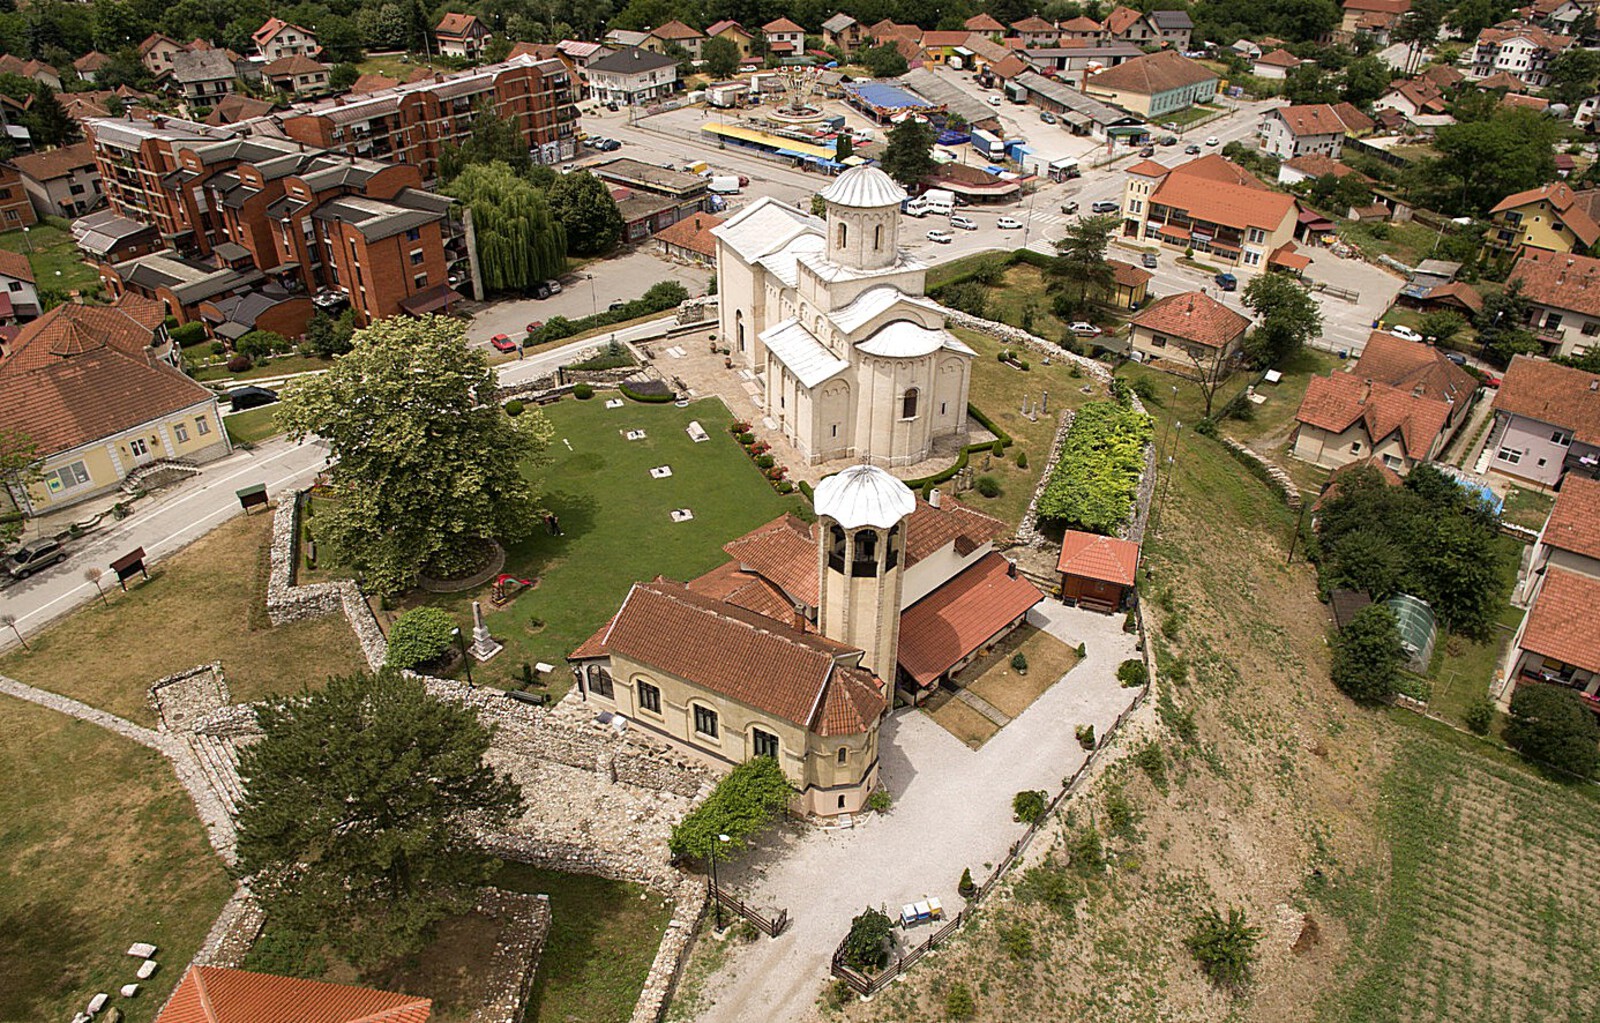 City of Arilje with the church